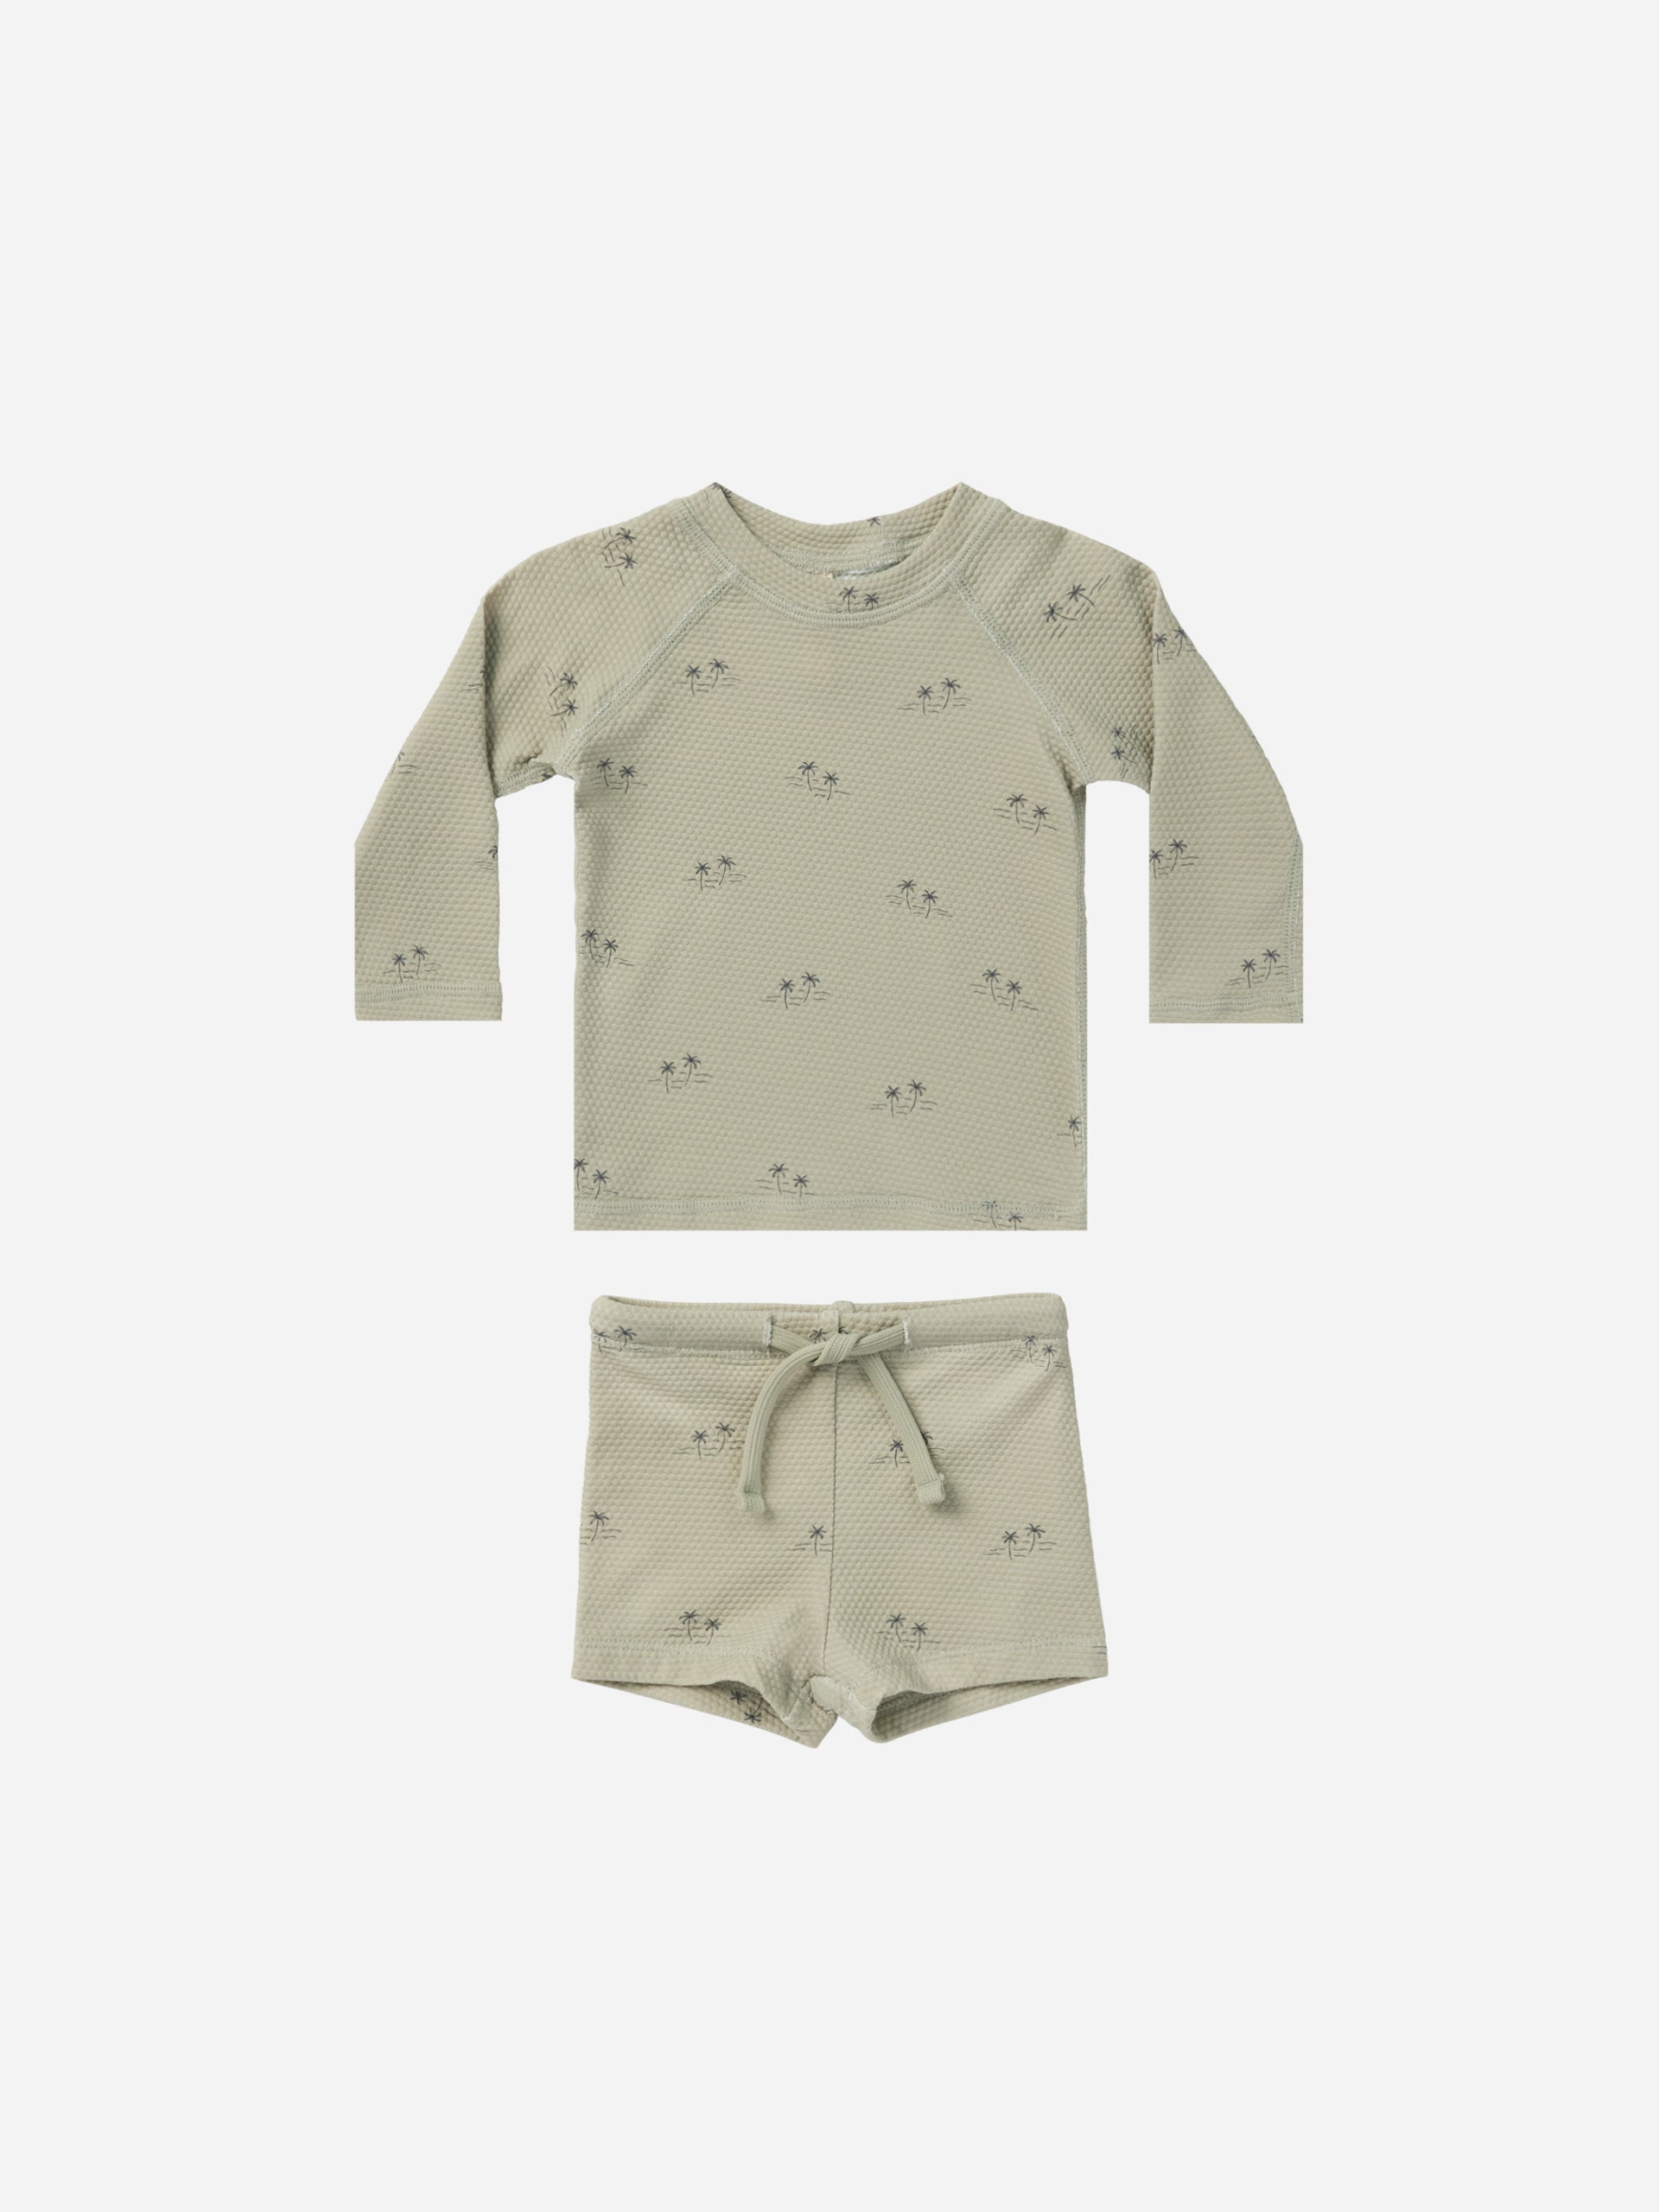 Finn Rashguard + Short Set || Palm Trees - Rylee + Cru | Kids Clothes | Trendy Baby Clothes | Modern Infant Outfits |